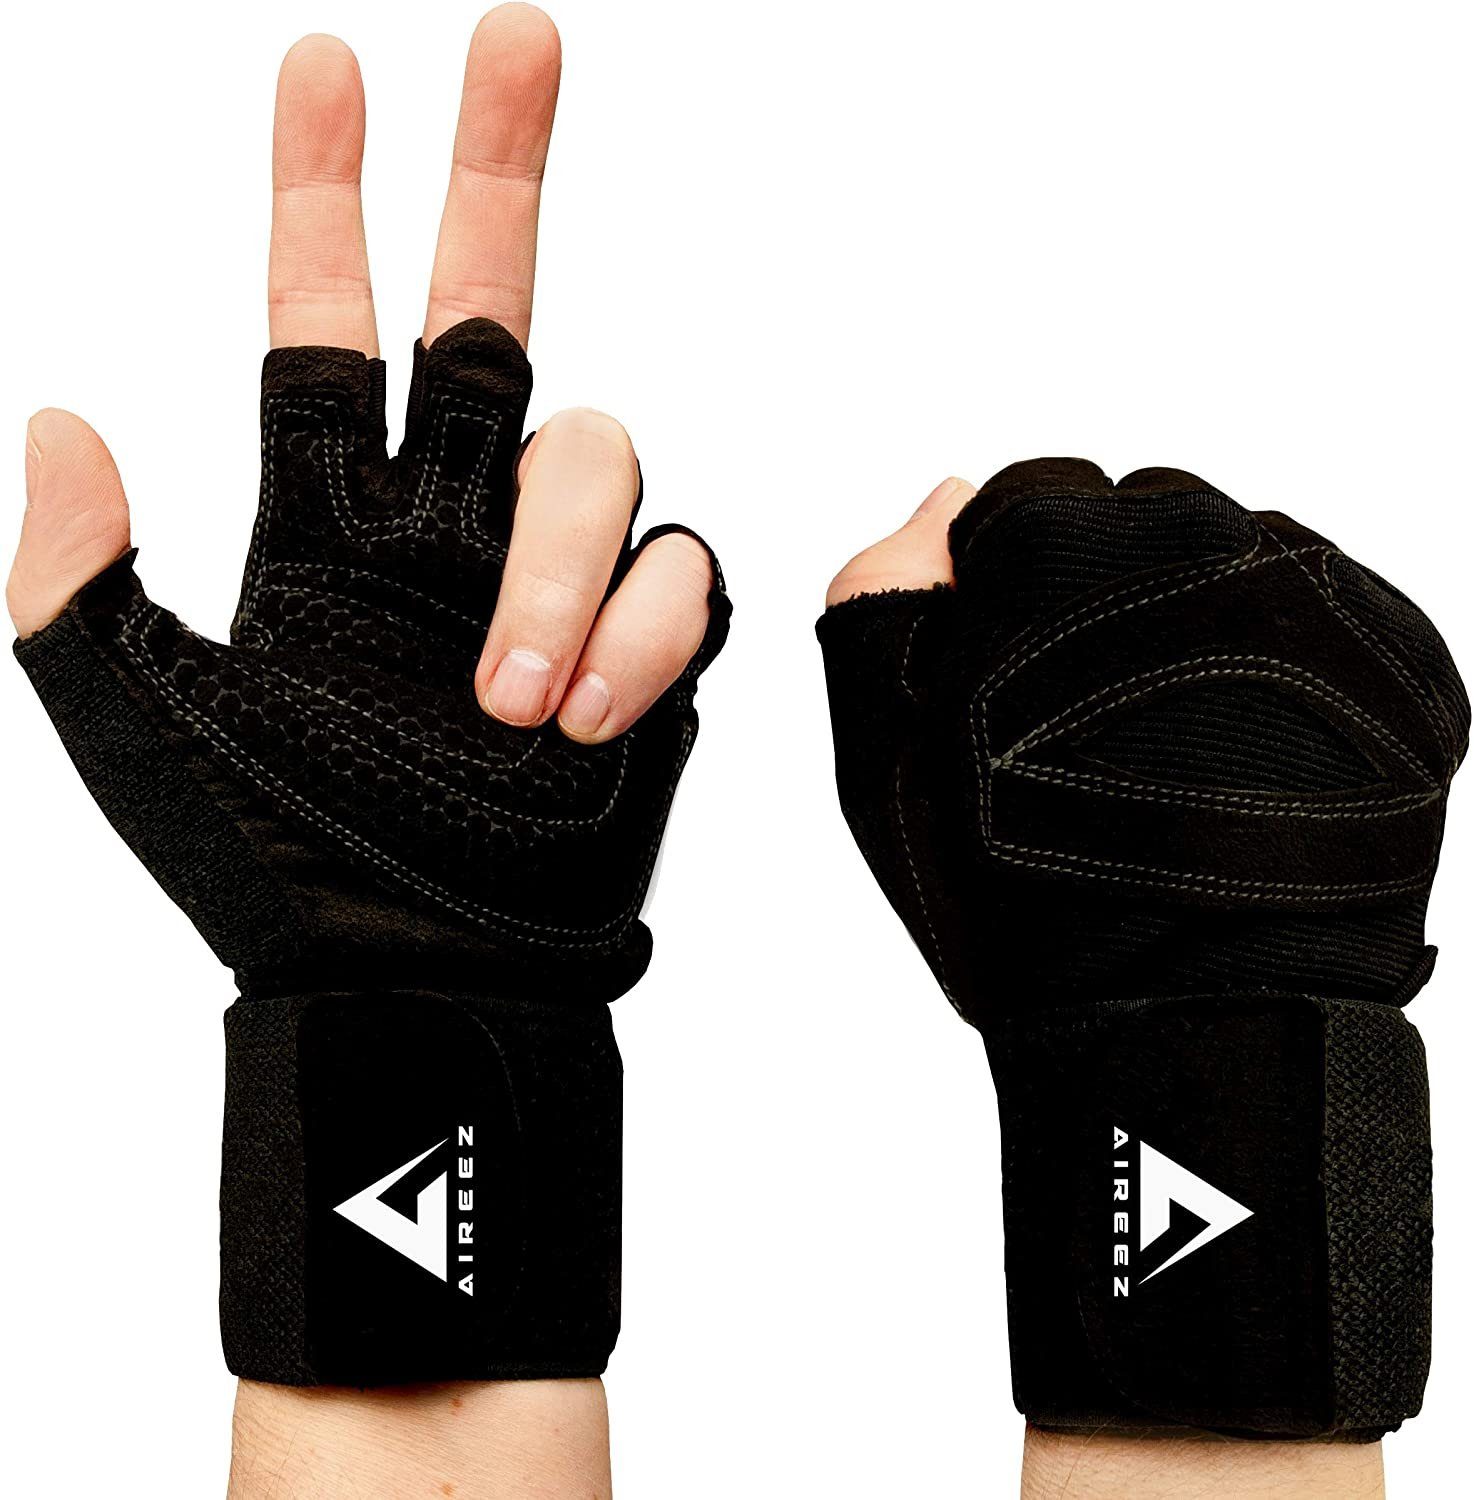 Trainingshandschuhe mit Bandage Herren Damen Fitness Gym Kraftsport Handschuhe